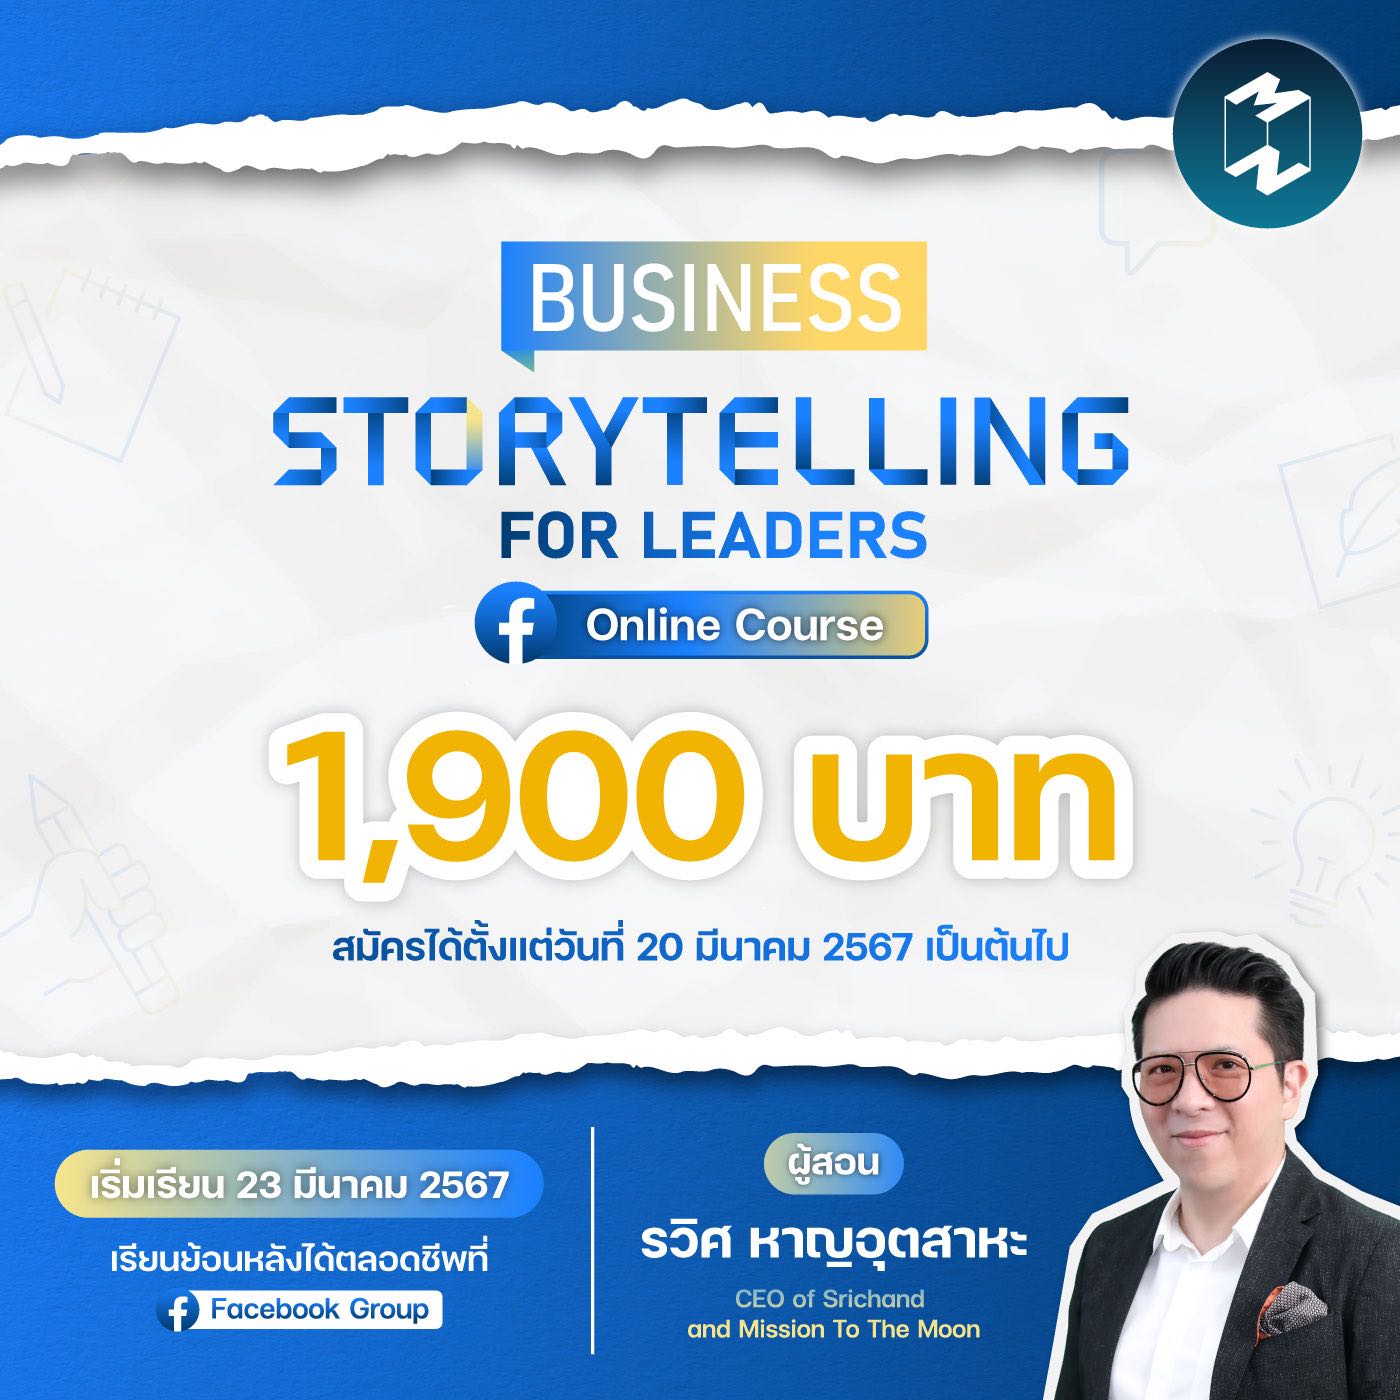 Business Storytelling for Leaders